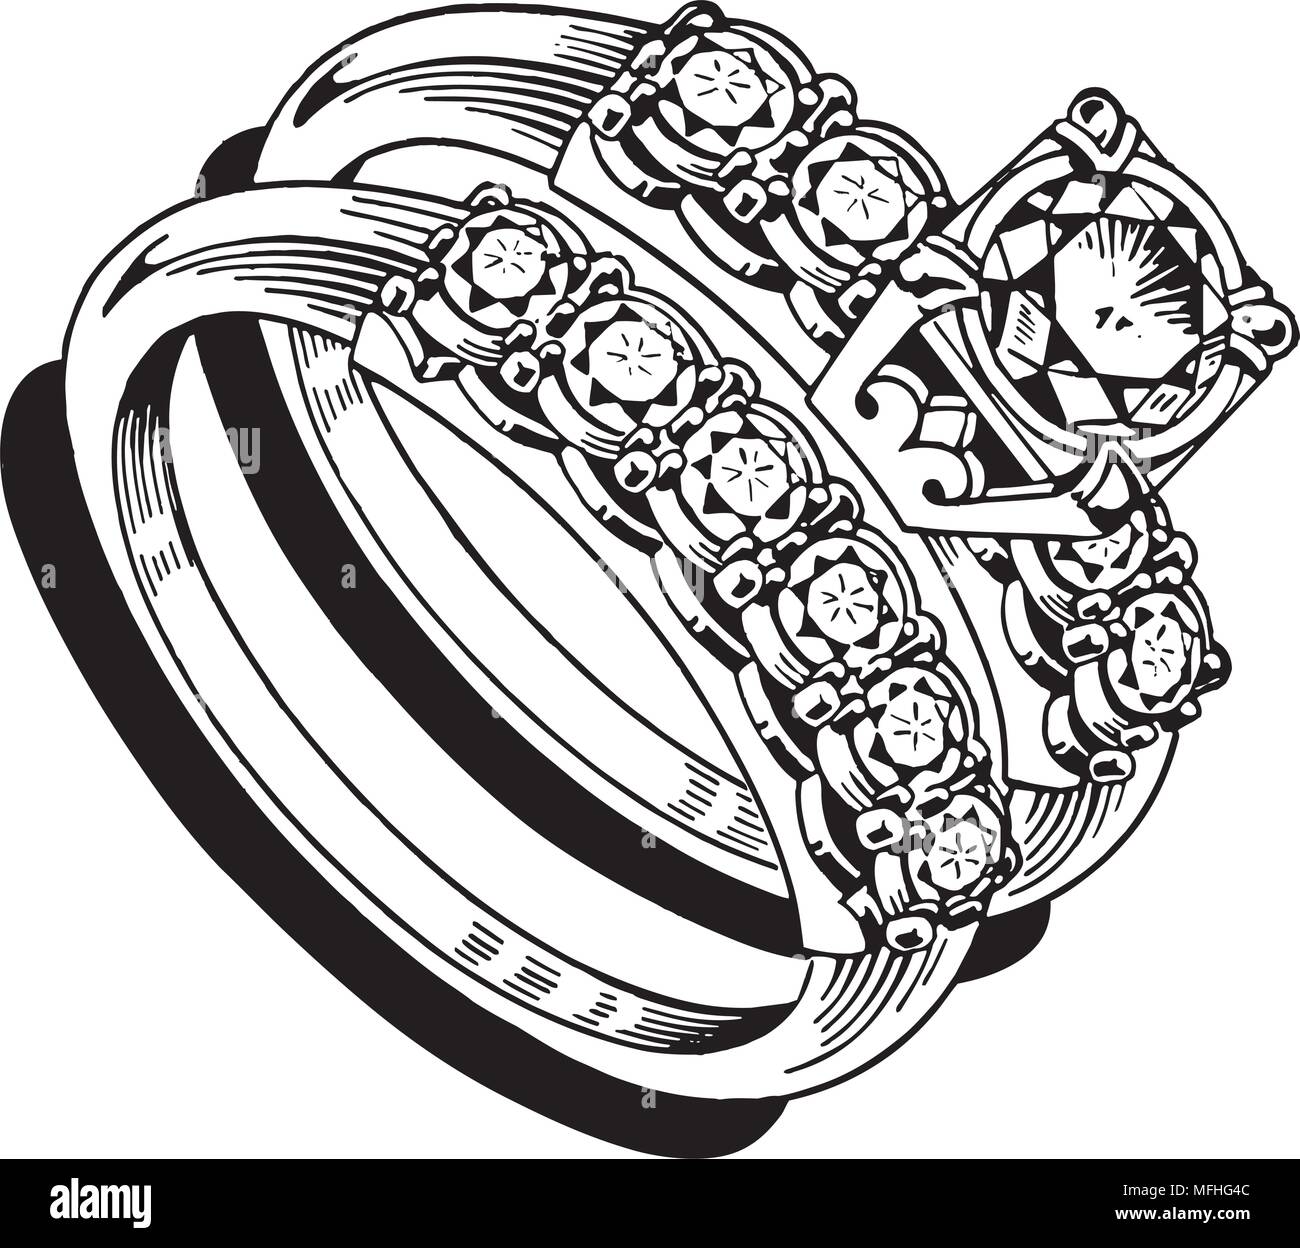 Diamond Ring Svg Wedding Ring Svg Clipart Image, Cricut Svg Image, Dxf,  Pdf, Eps, Jpg, Png, Svg, Silhouette, Cameo, Design - Etsy